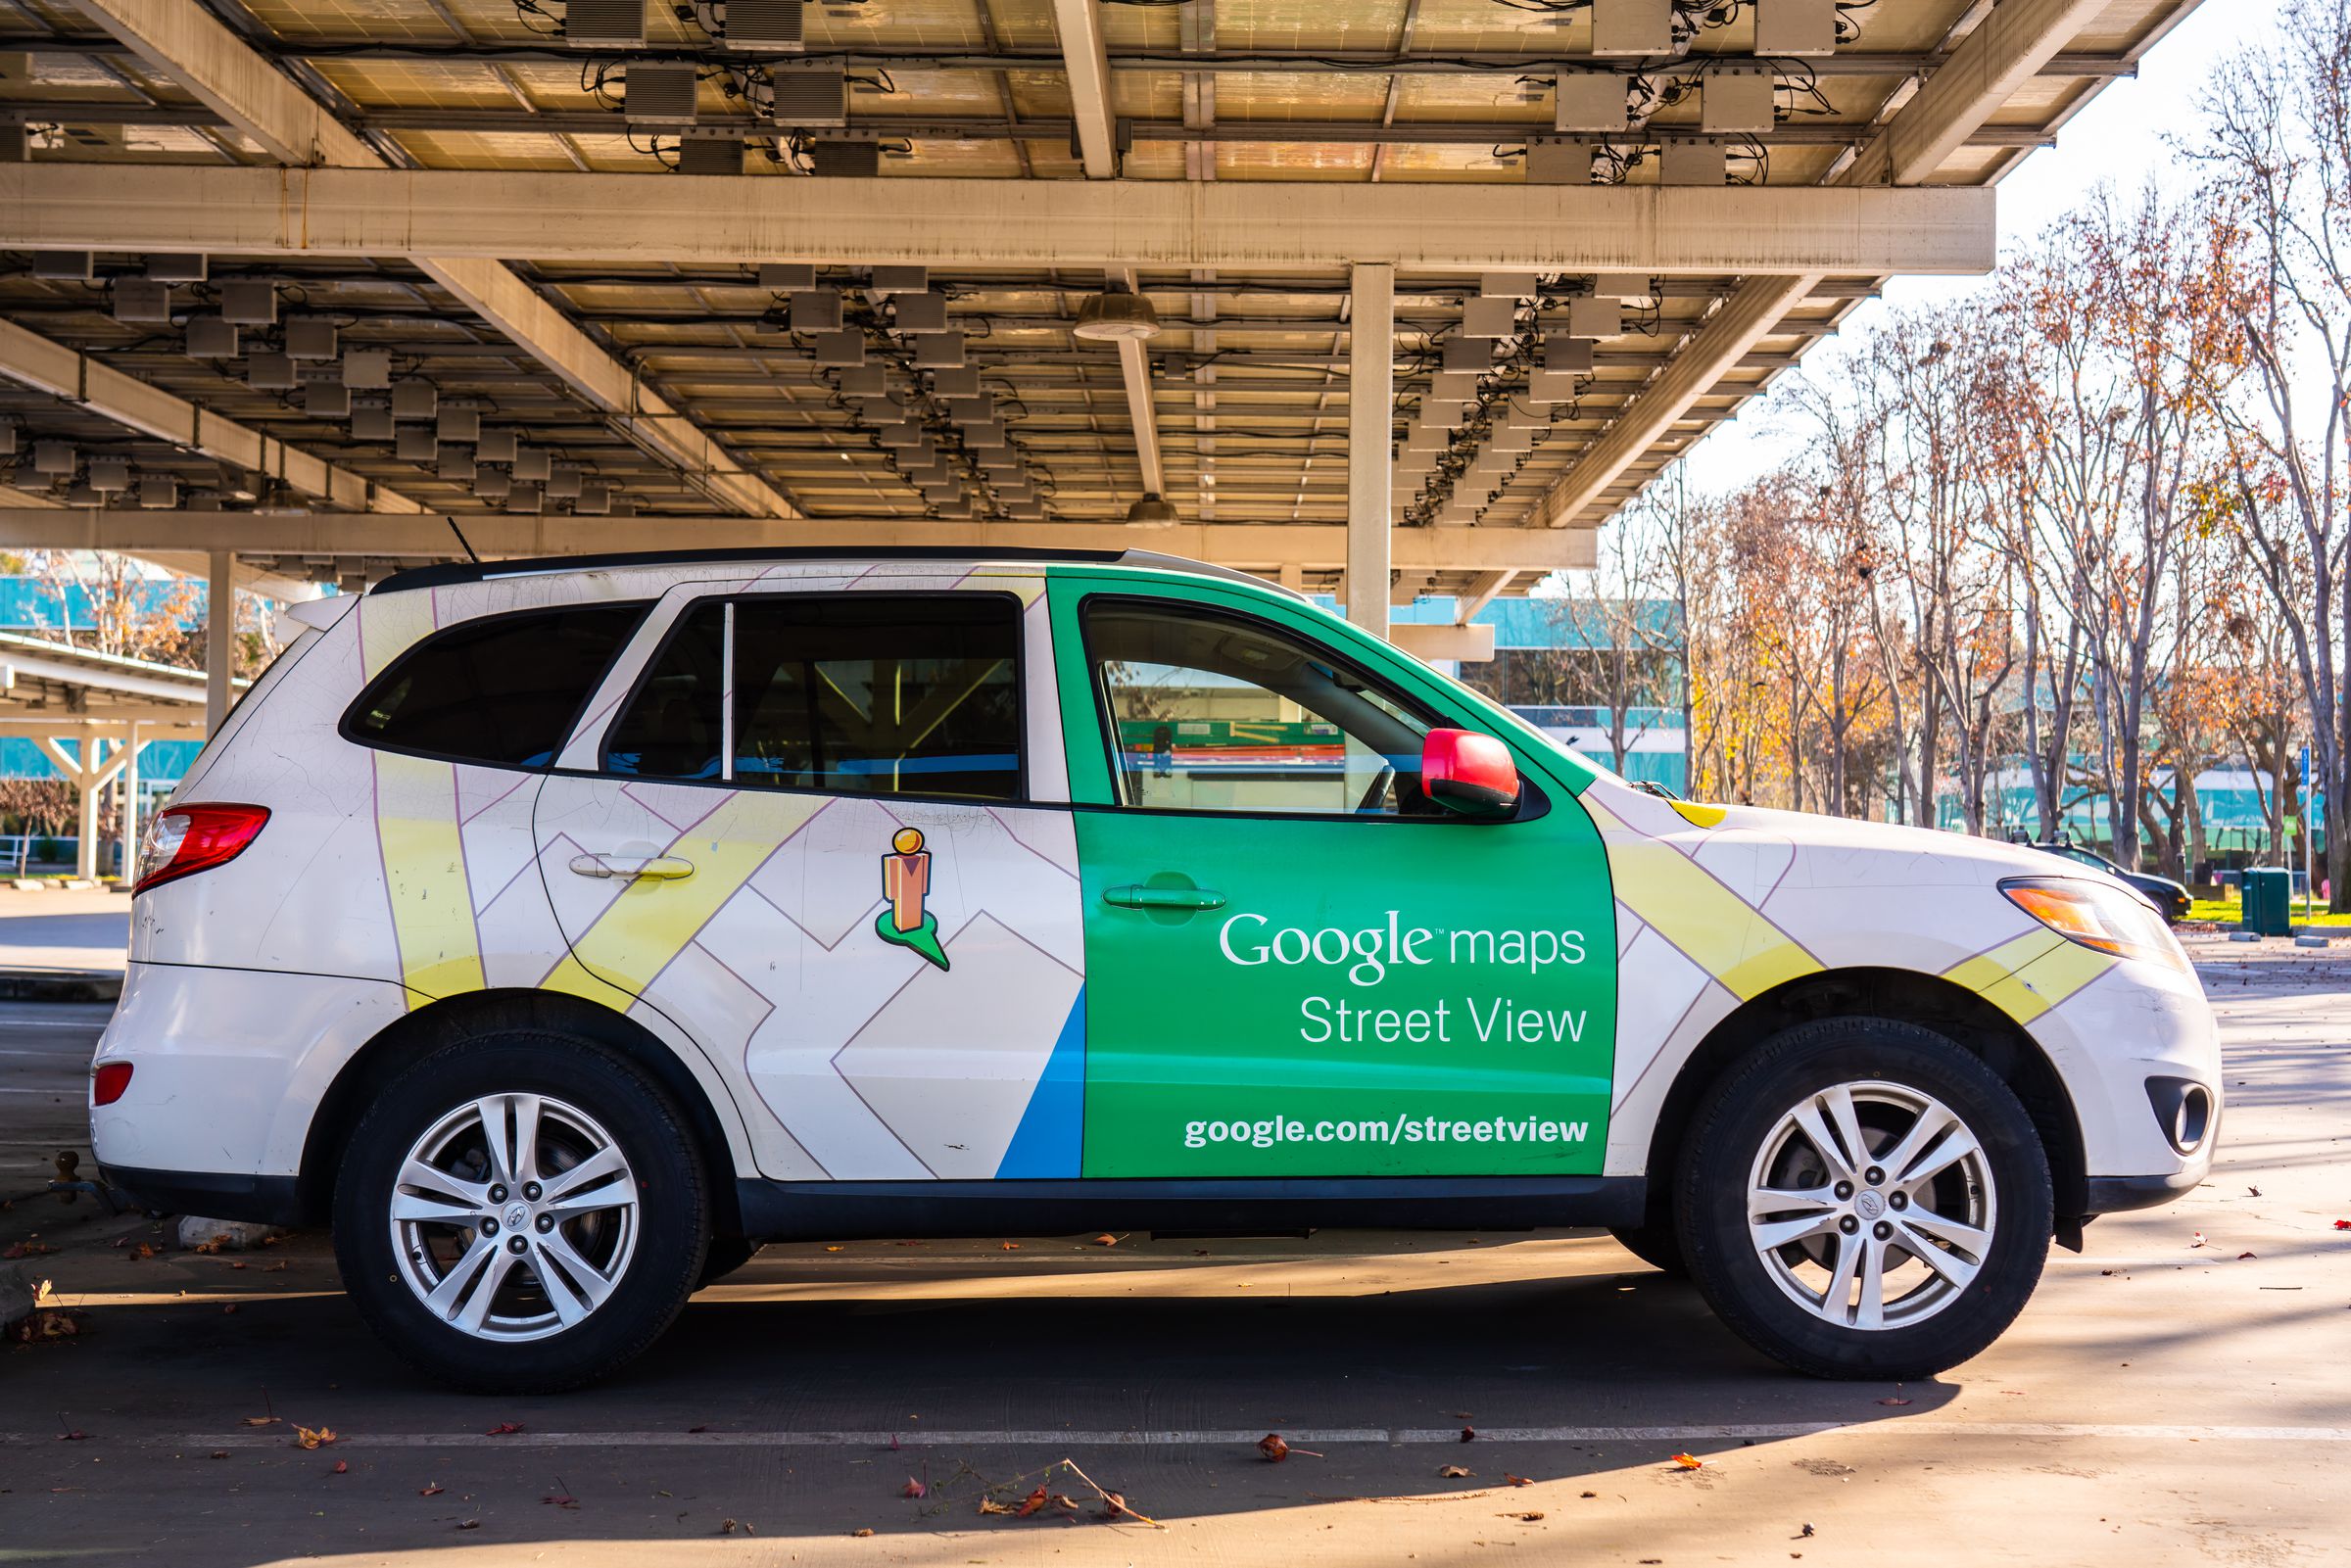 Google Maps Street View car seen at Google campus...